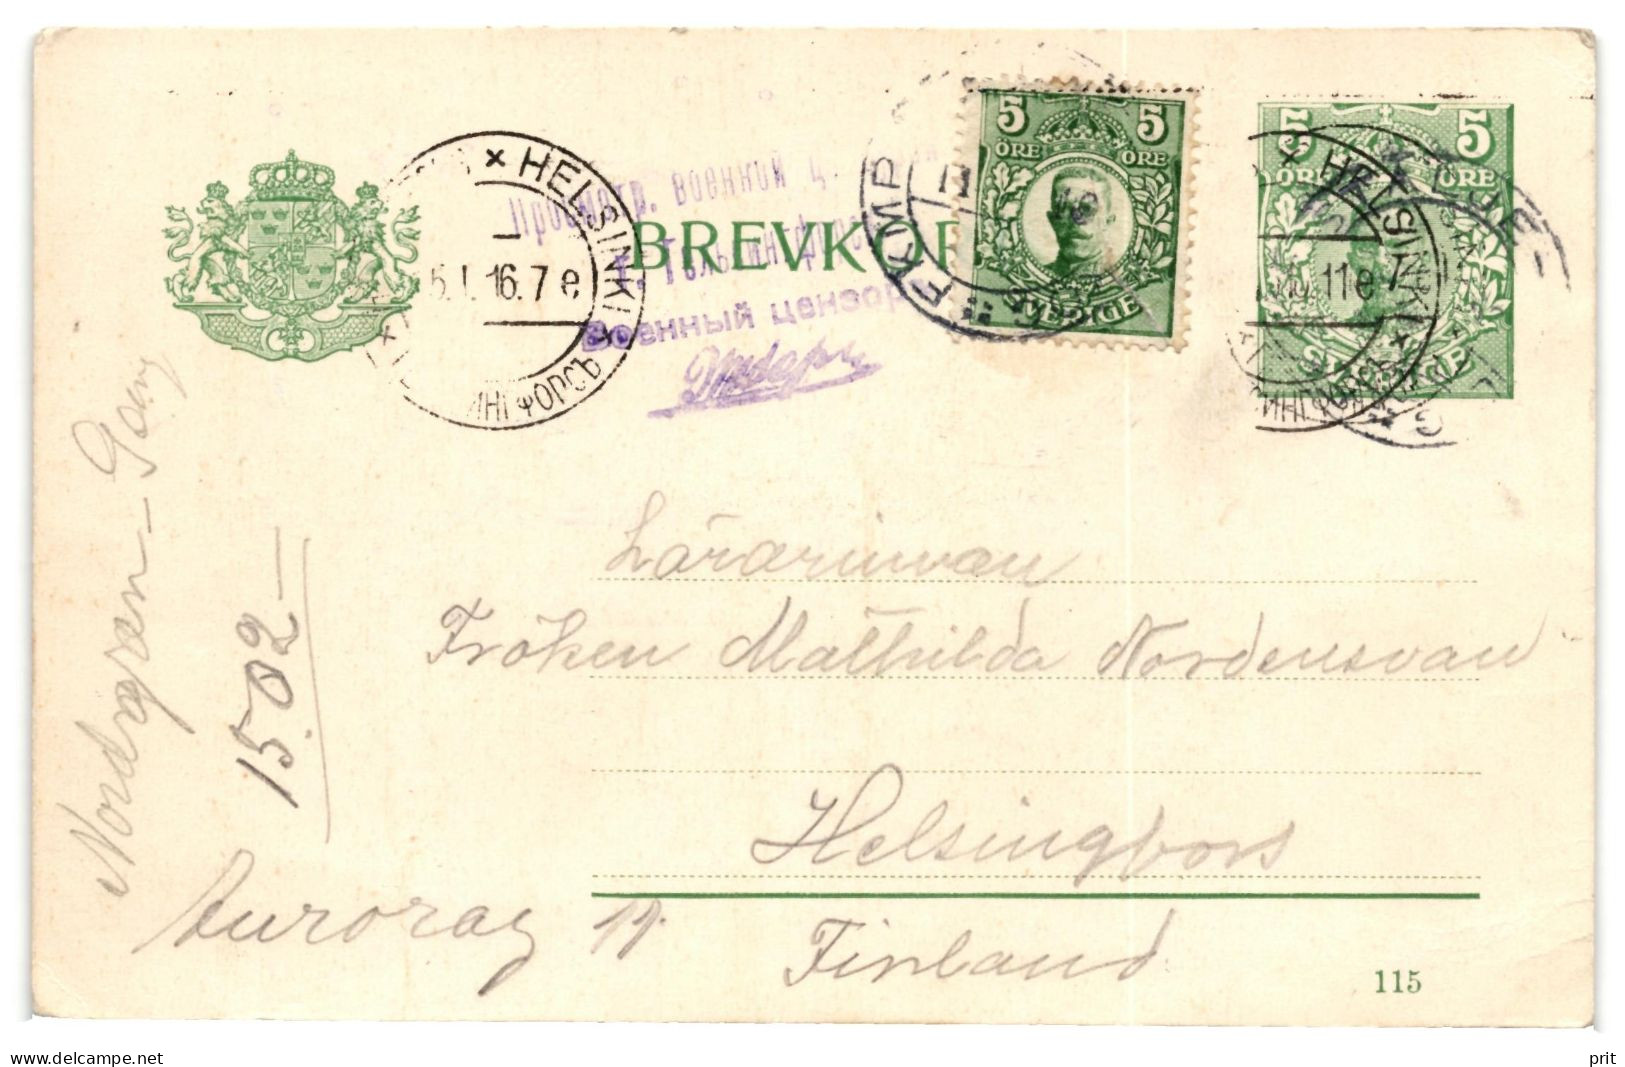 Helsinki Helsingfors WW1 Rare Finland Russian Government Military Censor Cancel 1917 On Swedish Postal Stationery Card - Militari